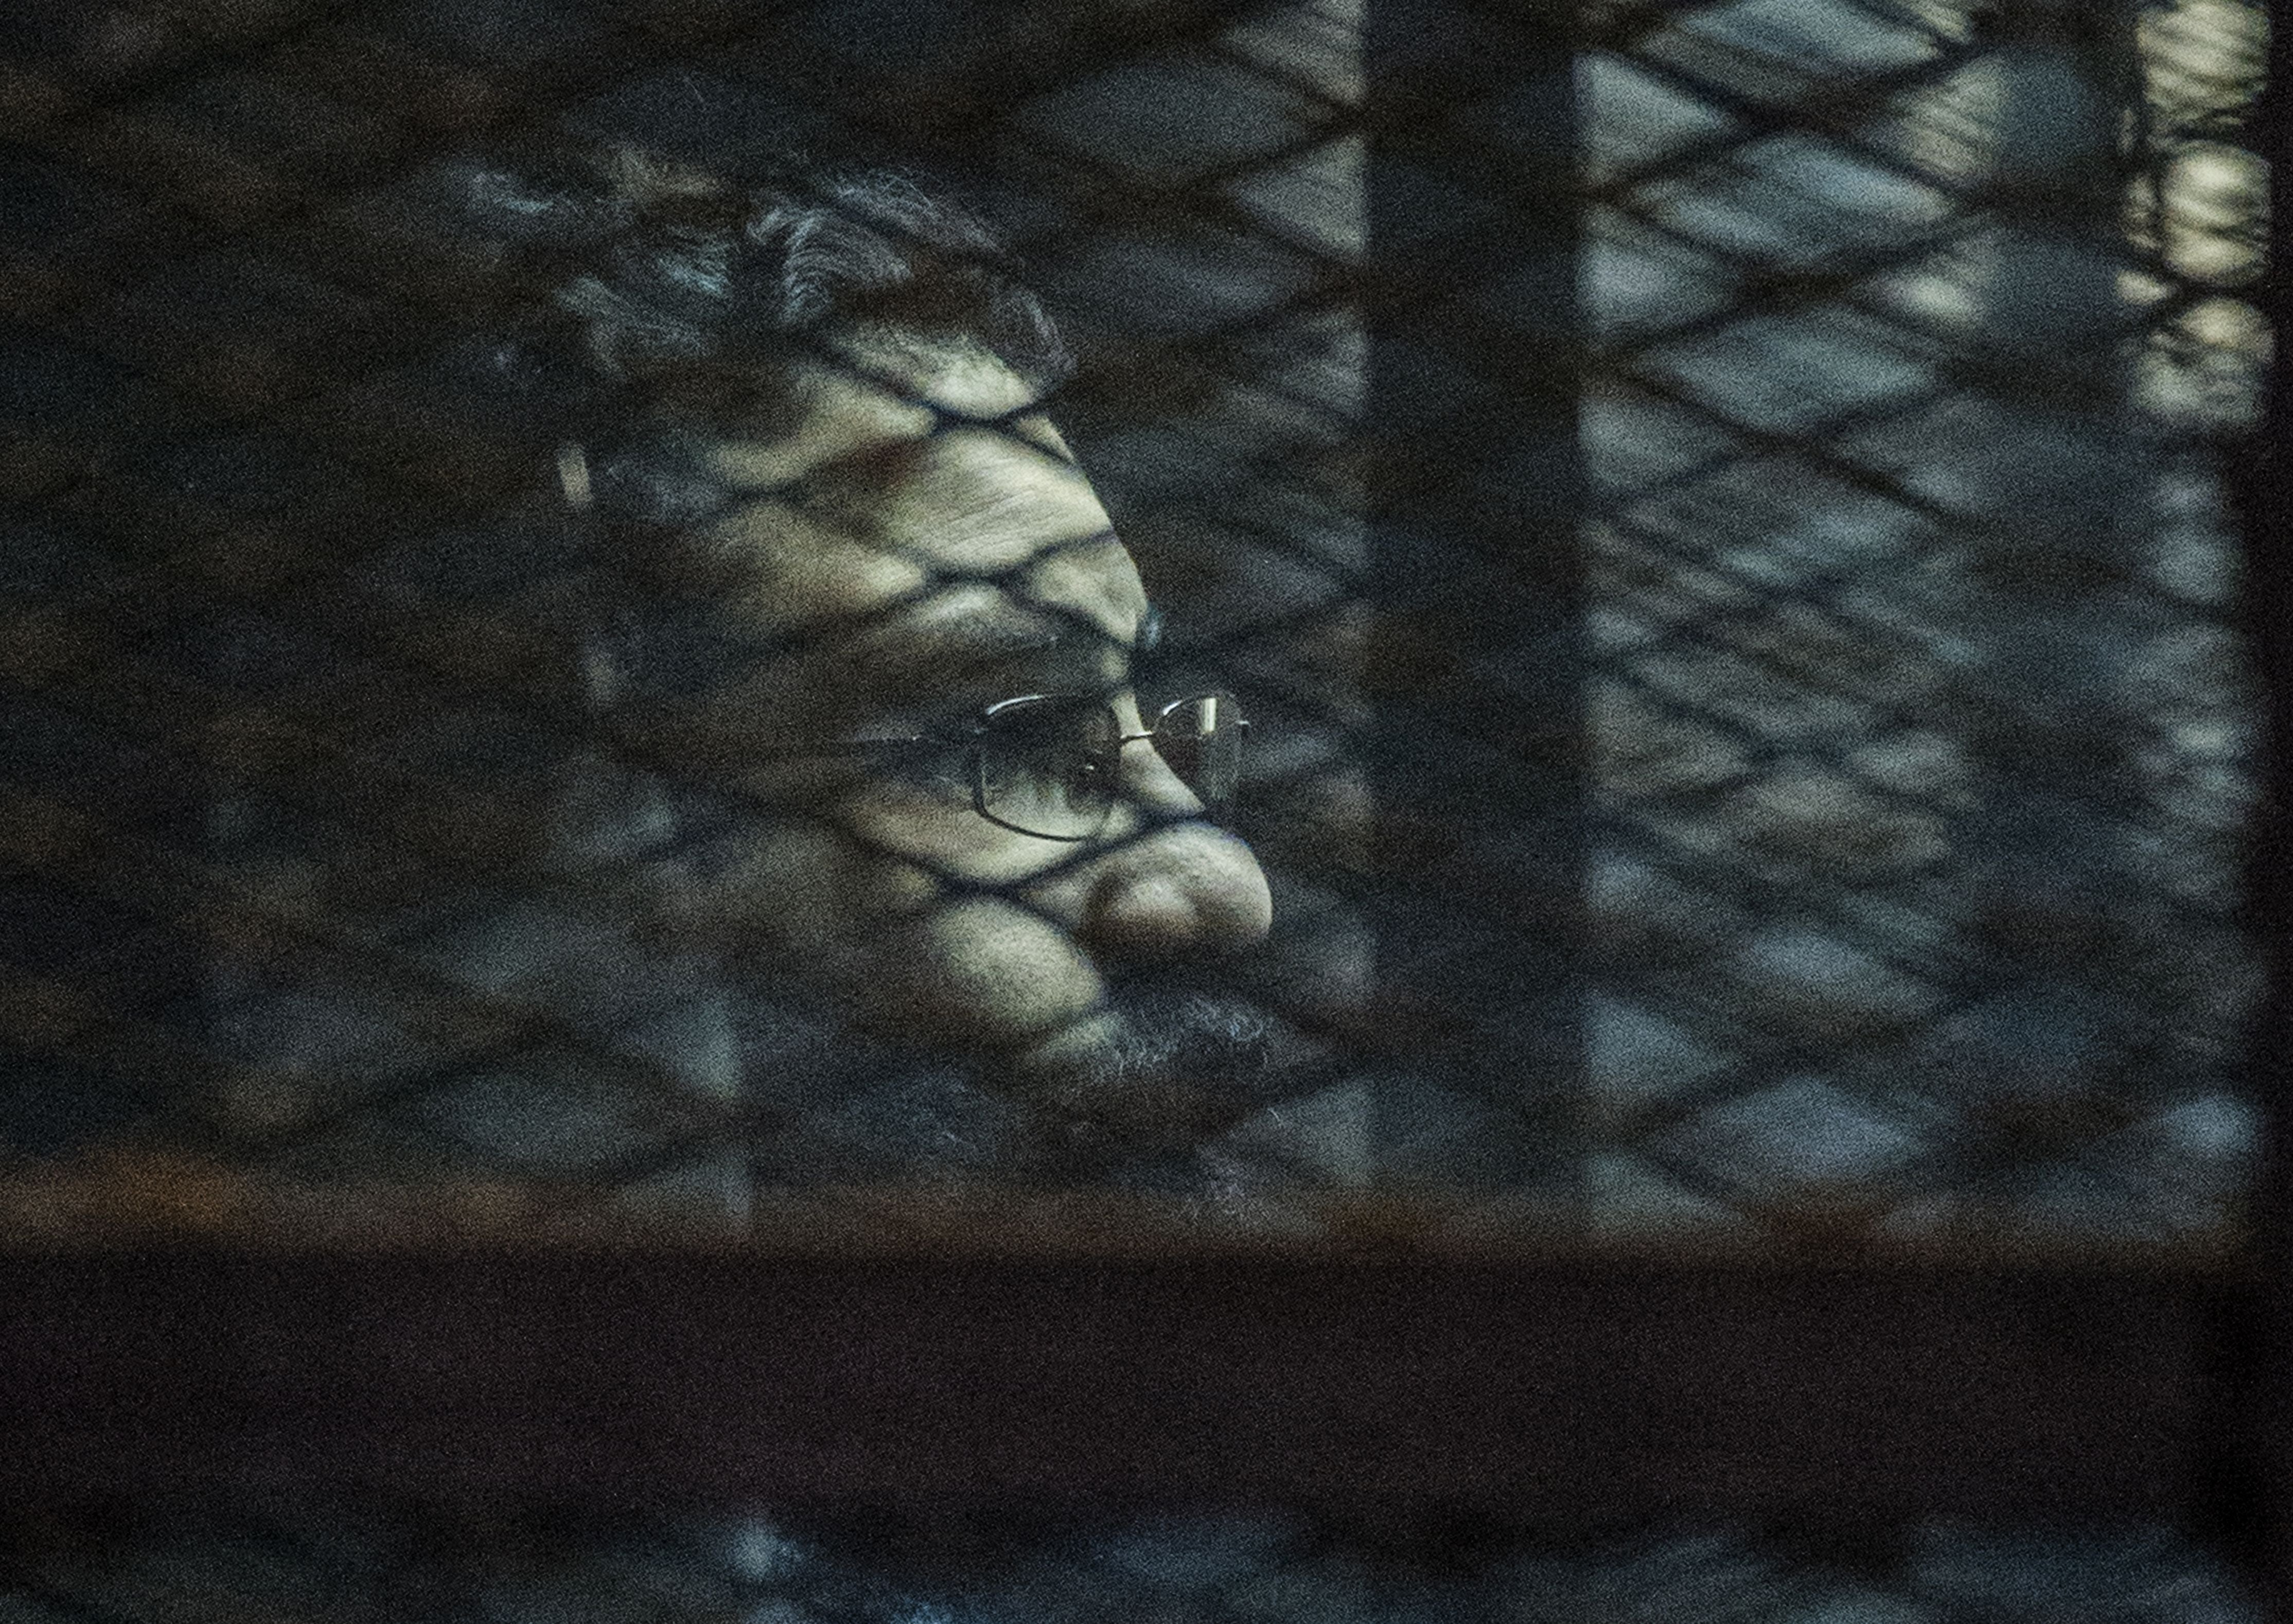 Egyptian activist and blogger Alaa Abdel El- Fattah has spent 1,000 days behind bars